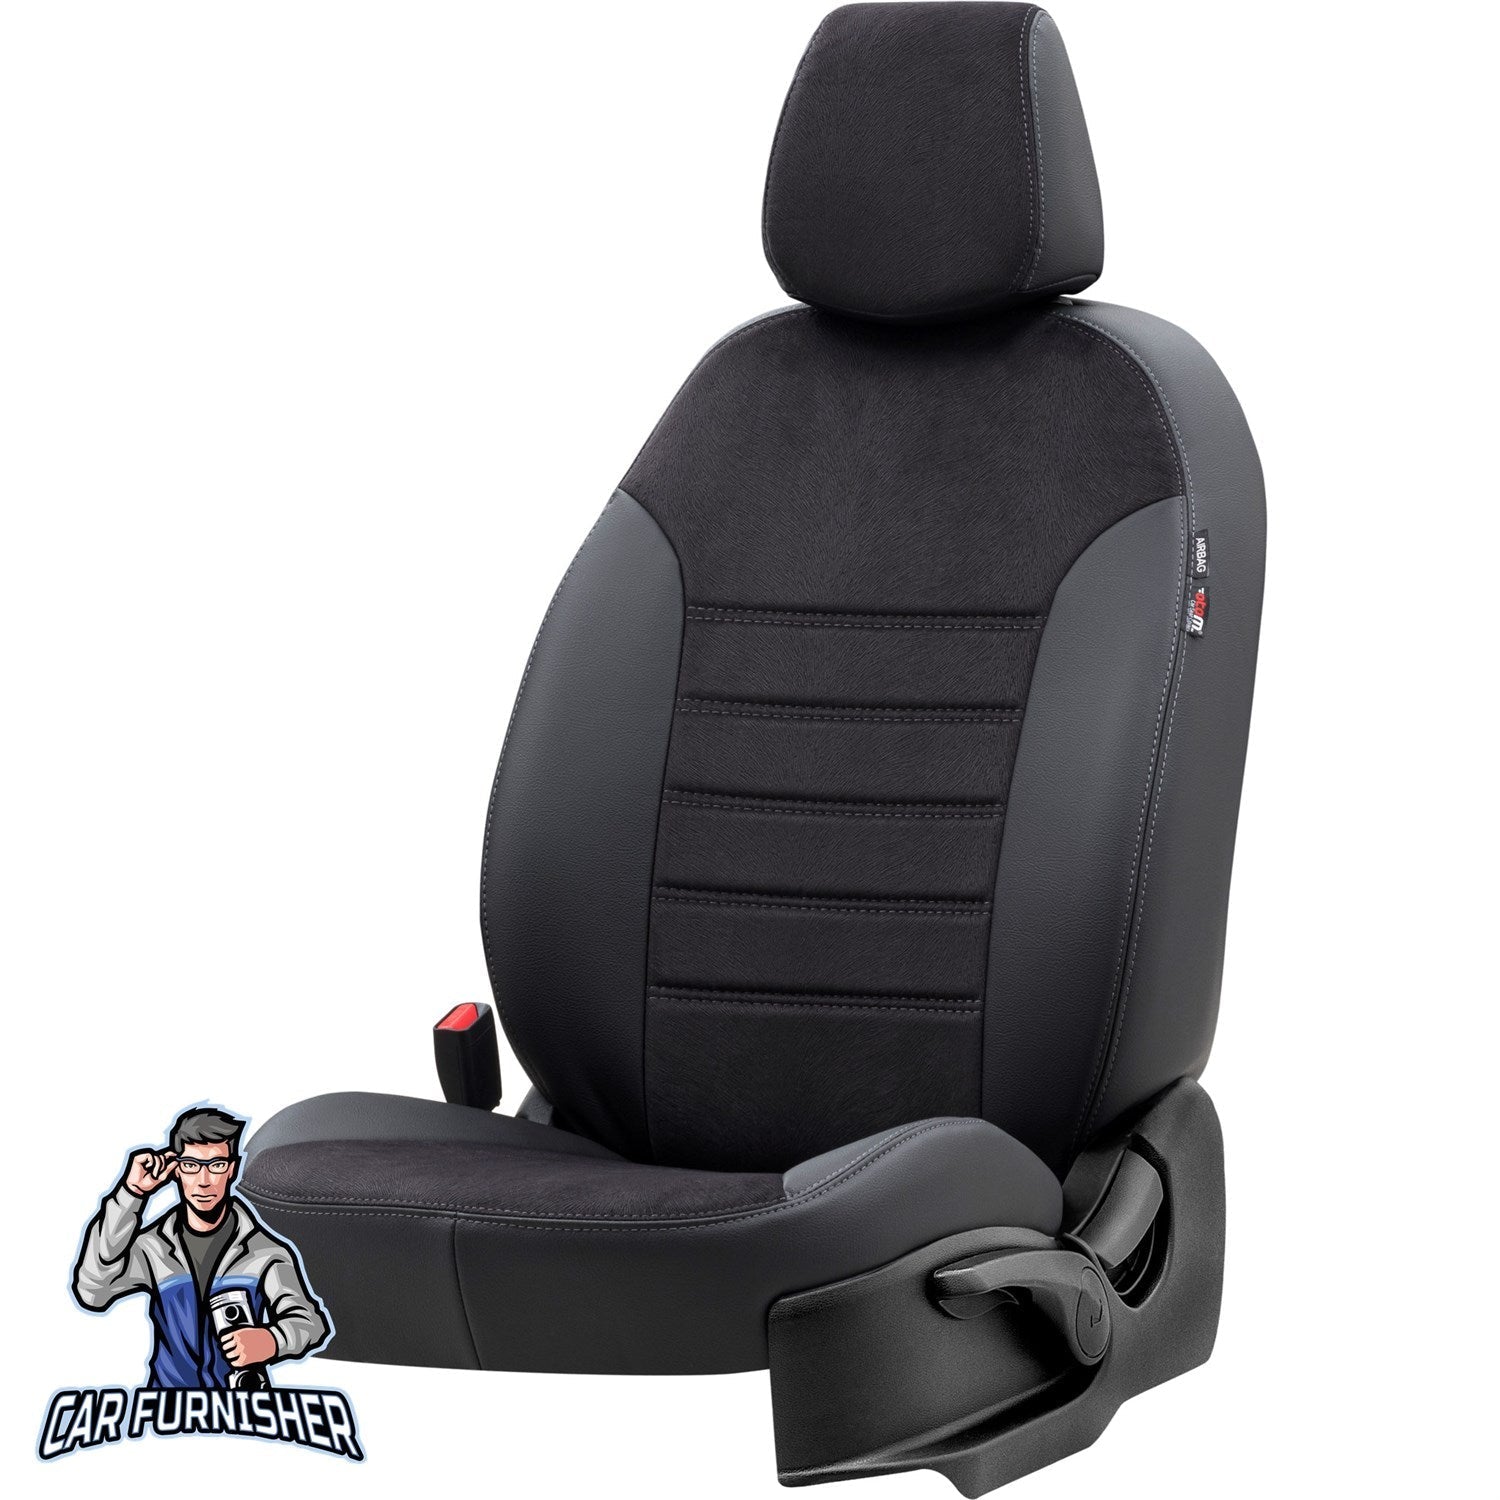 Seat Cordoba Car Seat Covers 2003-2009 London Design Black Full Set (5 Seats + Handrest) Leather & Fabric